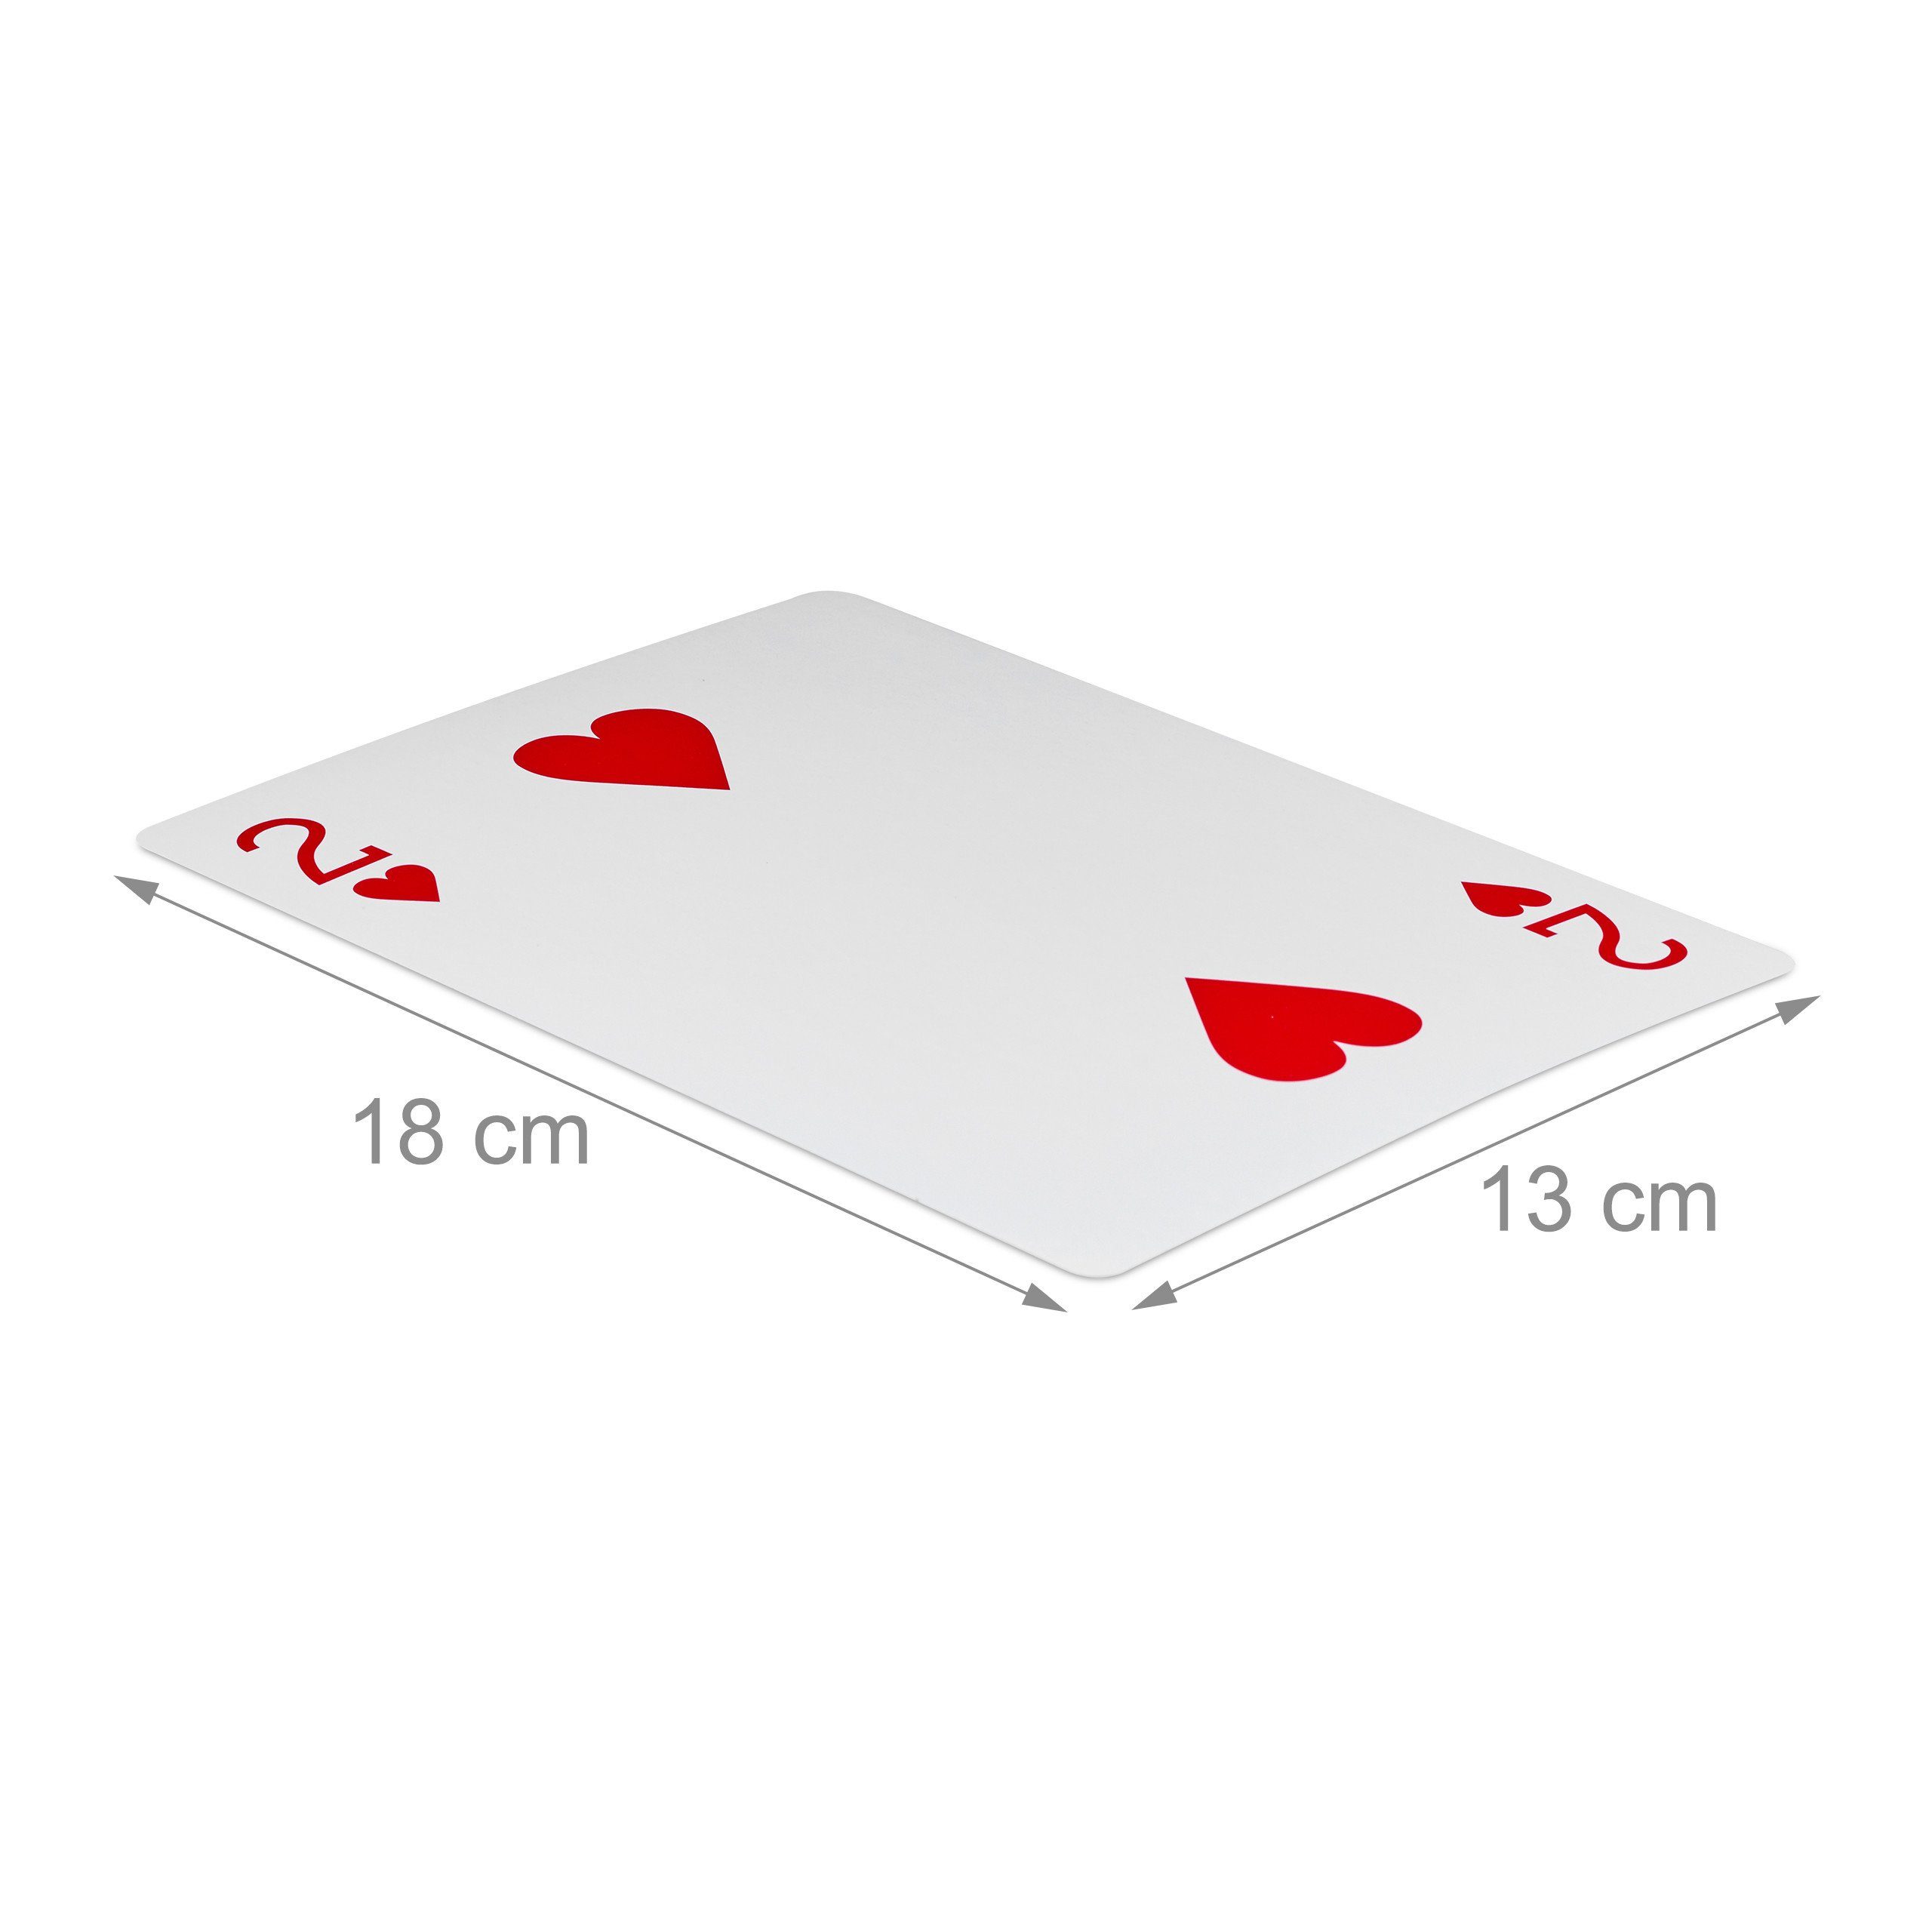 Spiel, relaxdays 2 54 x Pokerkarten Karten Jumbo